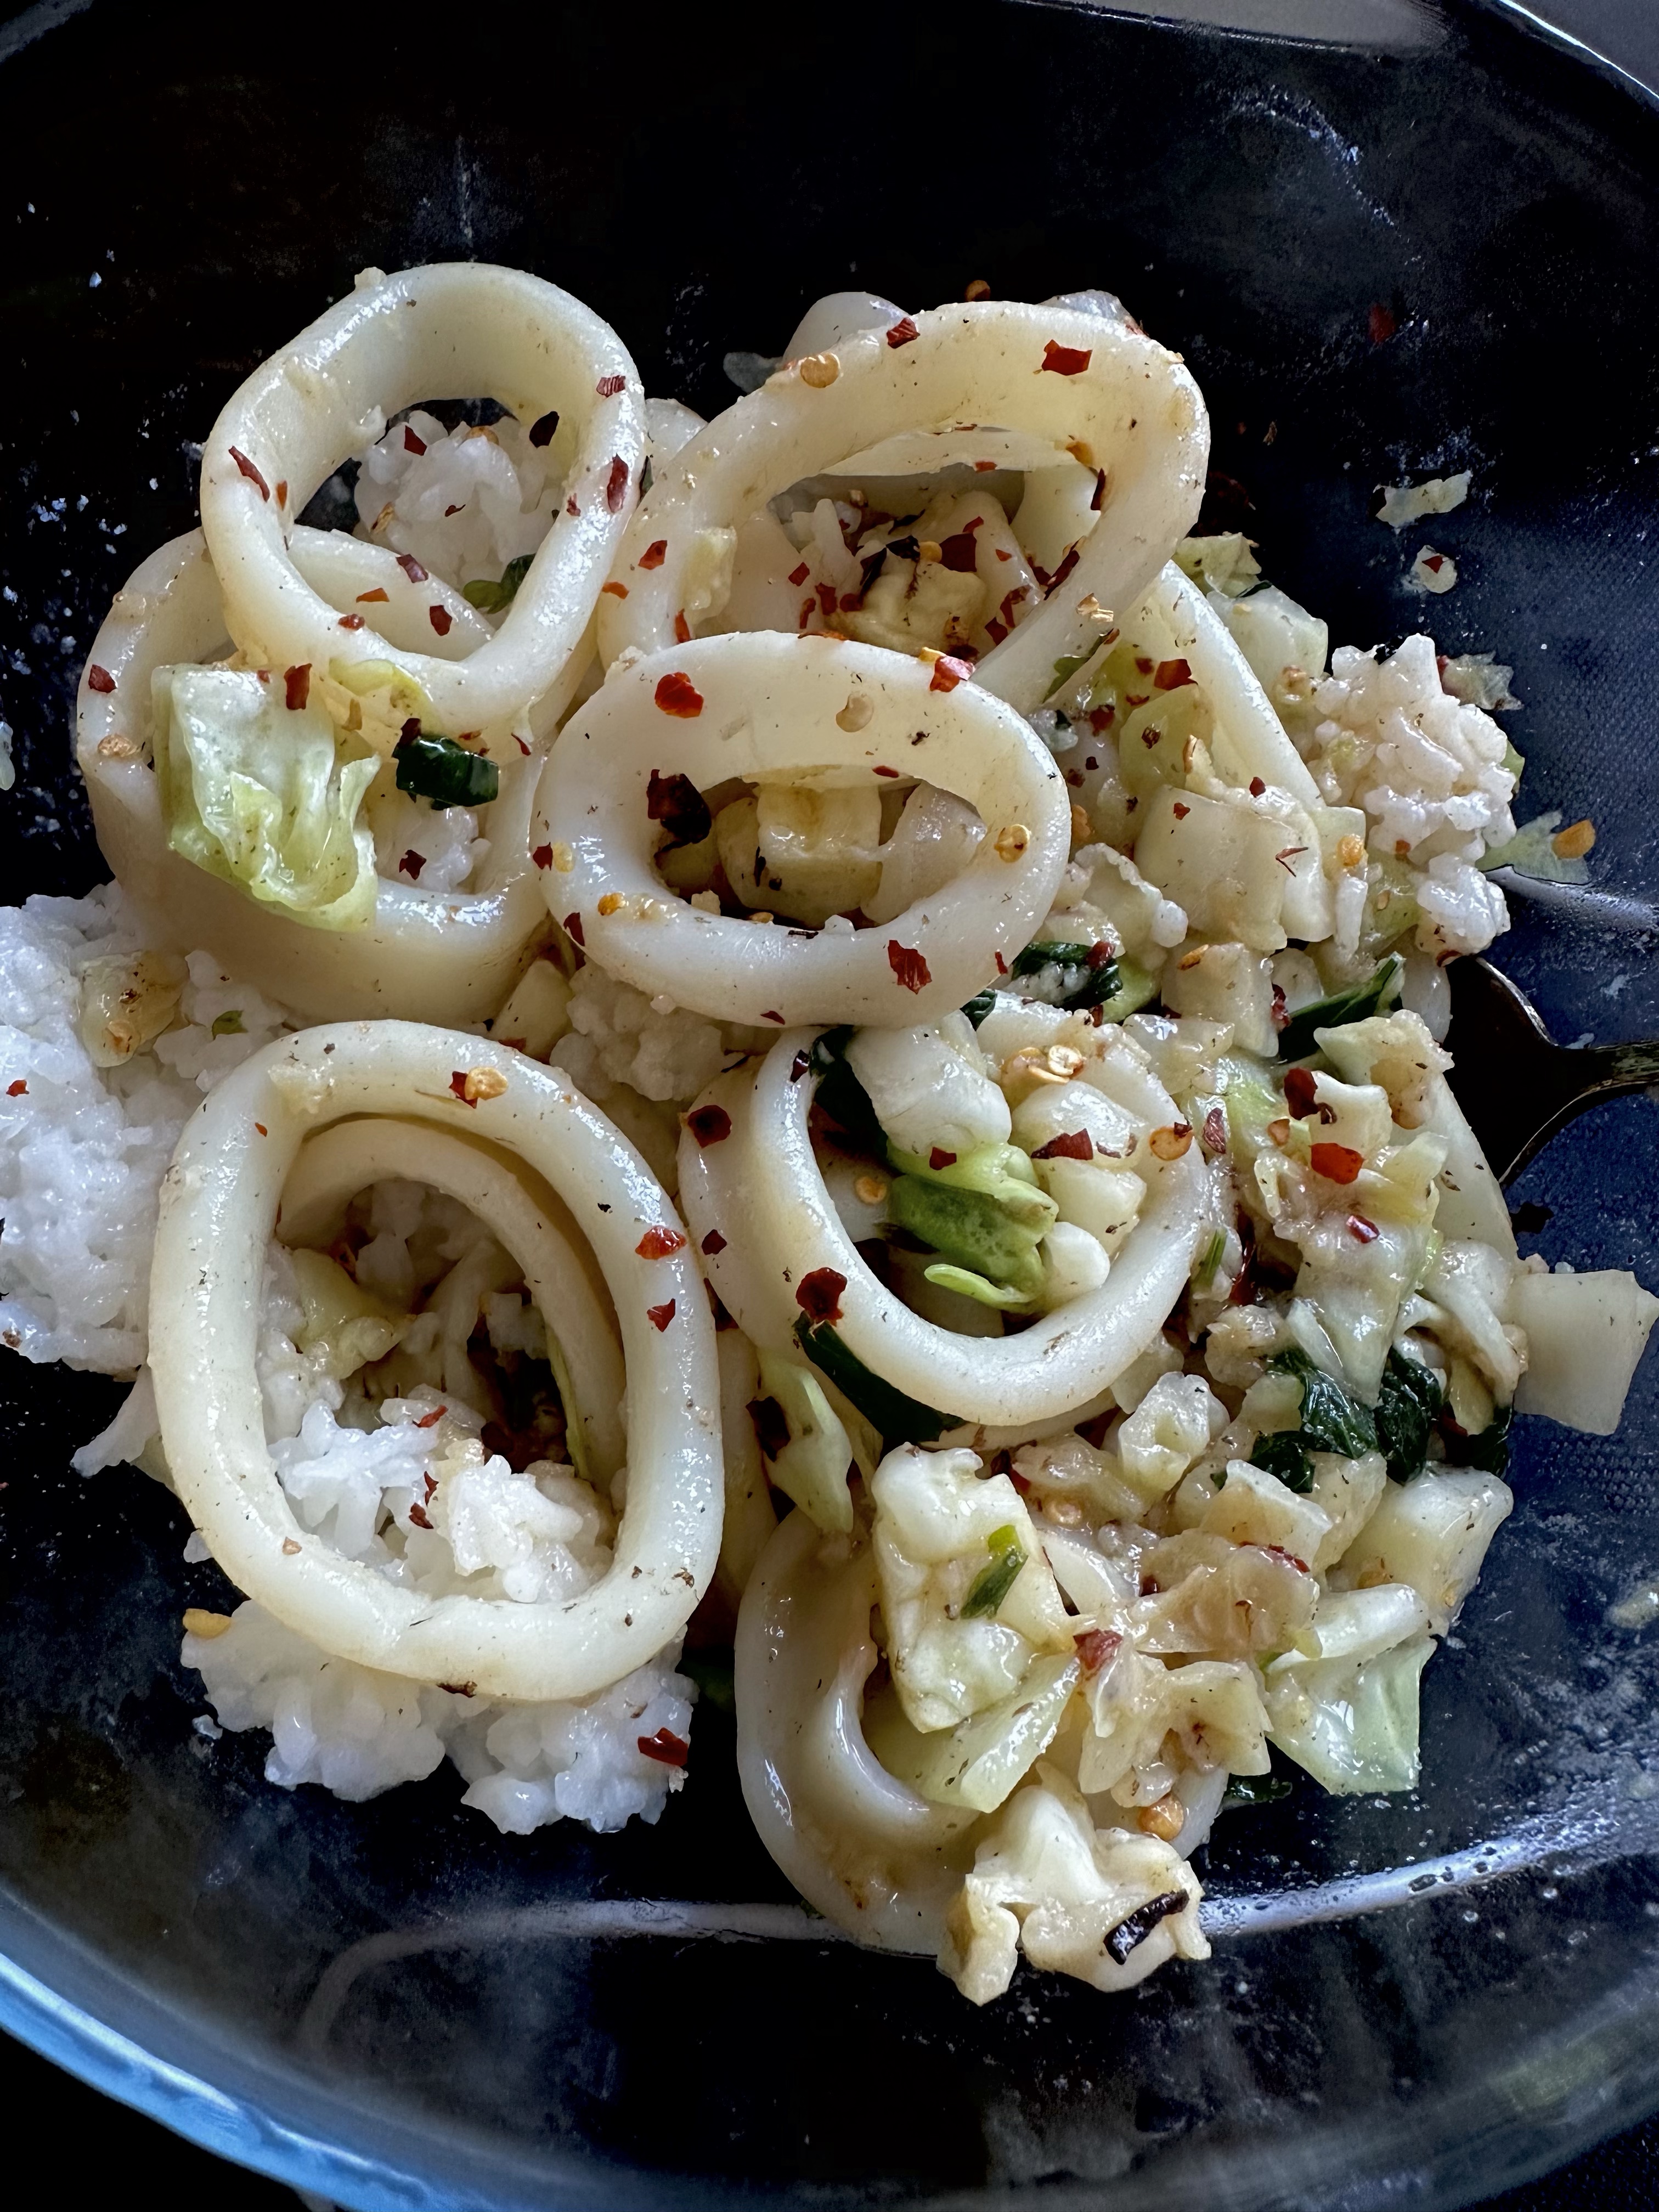 Calamares with garlic and chili